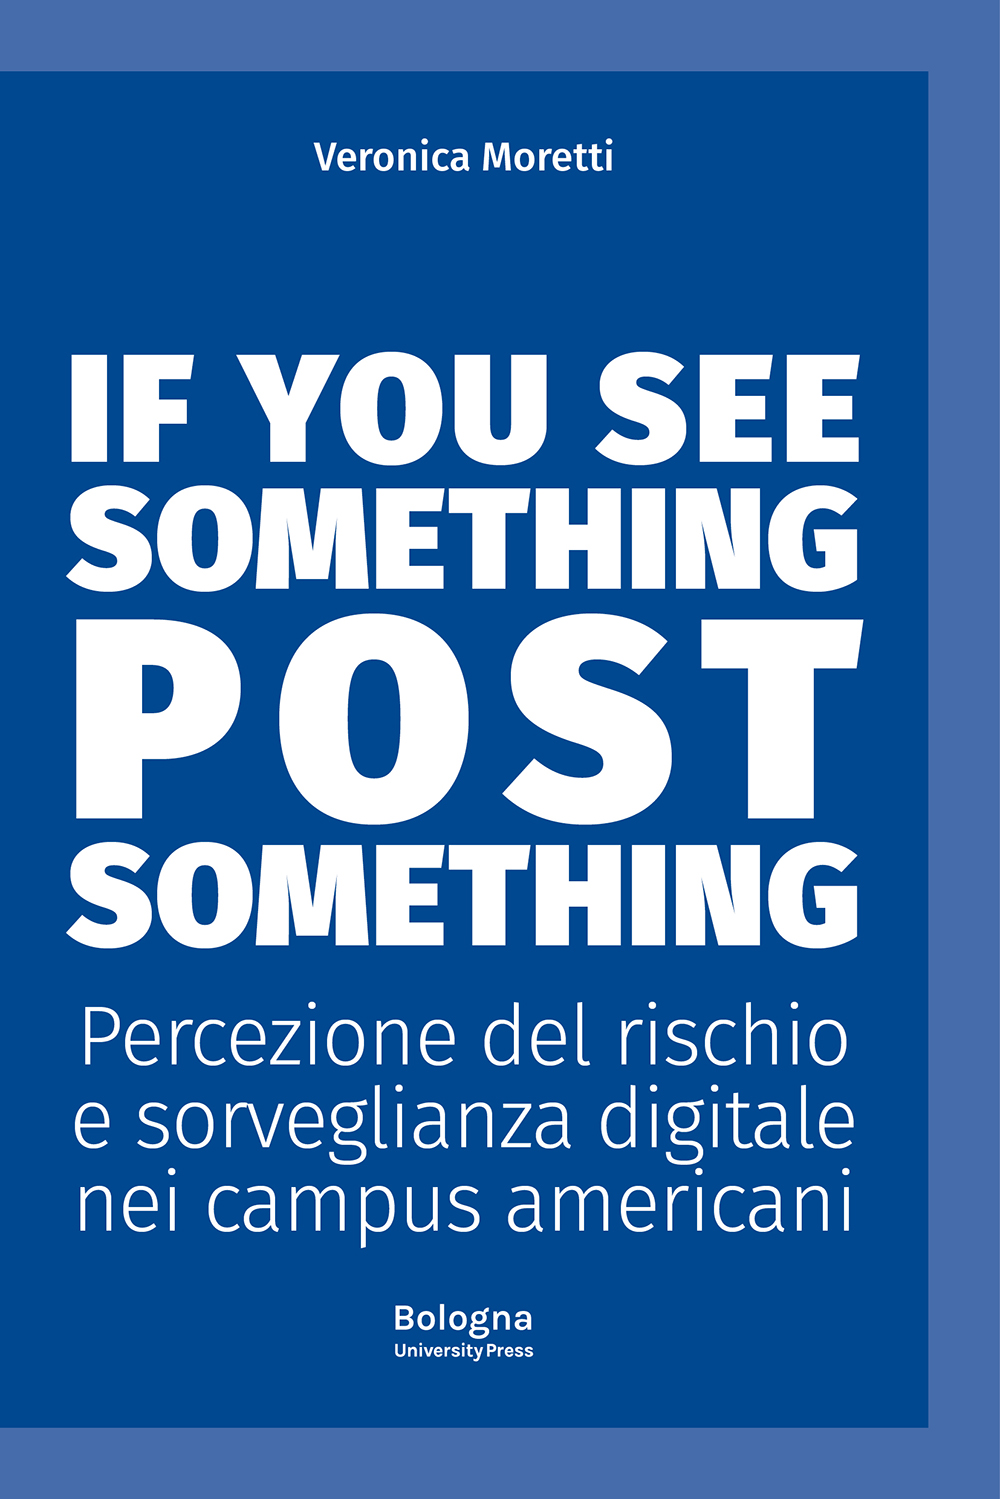 If you see something post something - Bologna University Press